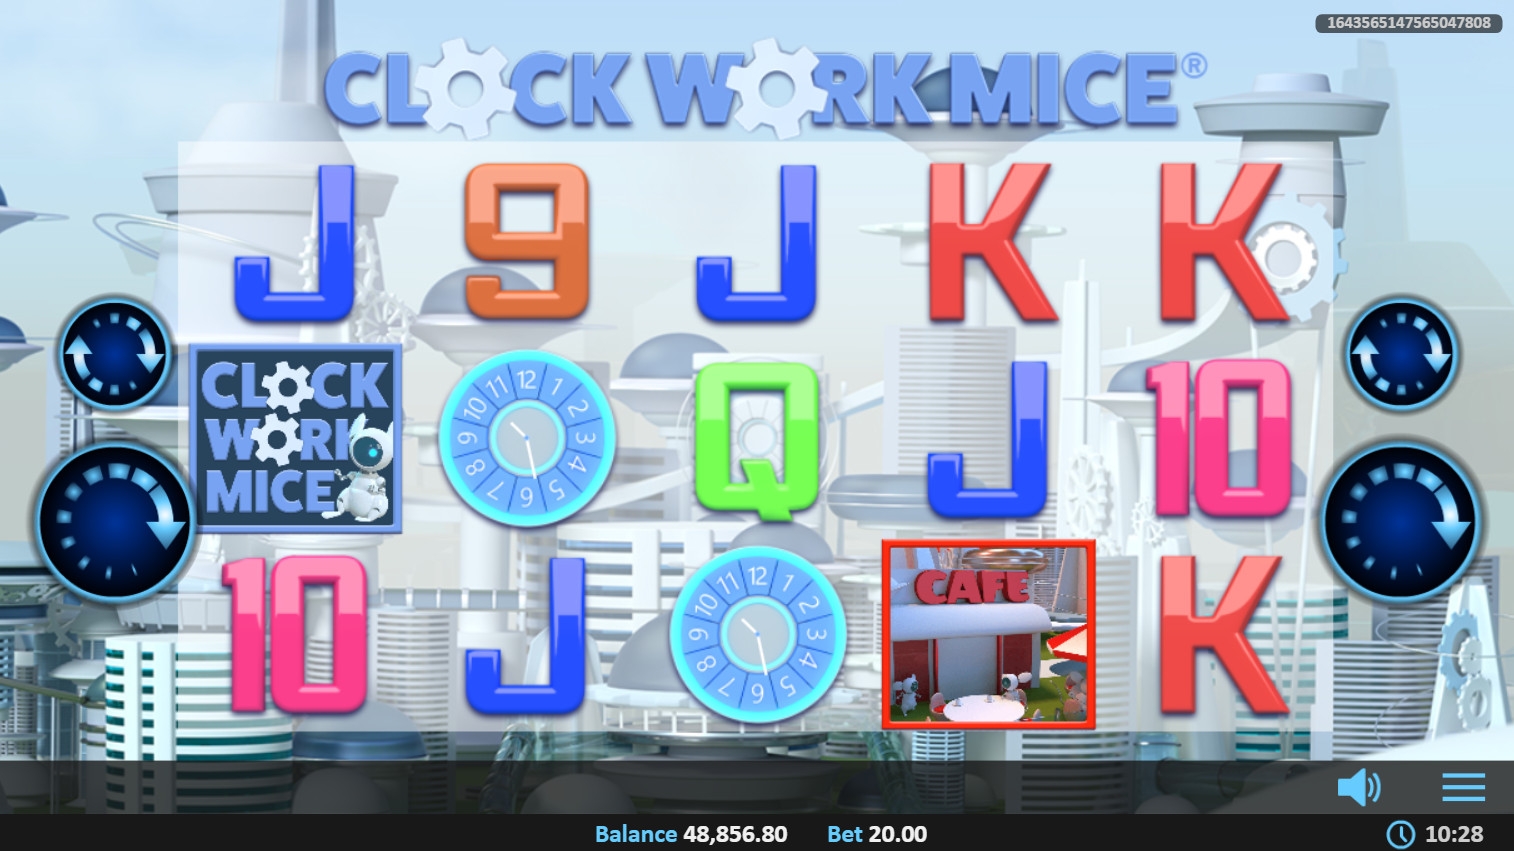 Clockwork Mice (Clockwork Mice) from category Slots